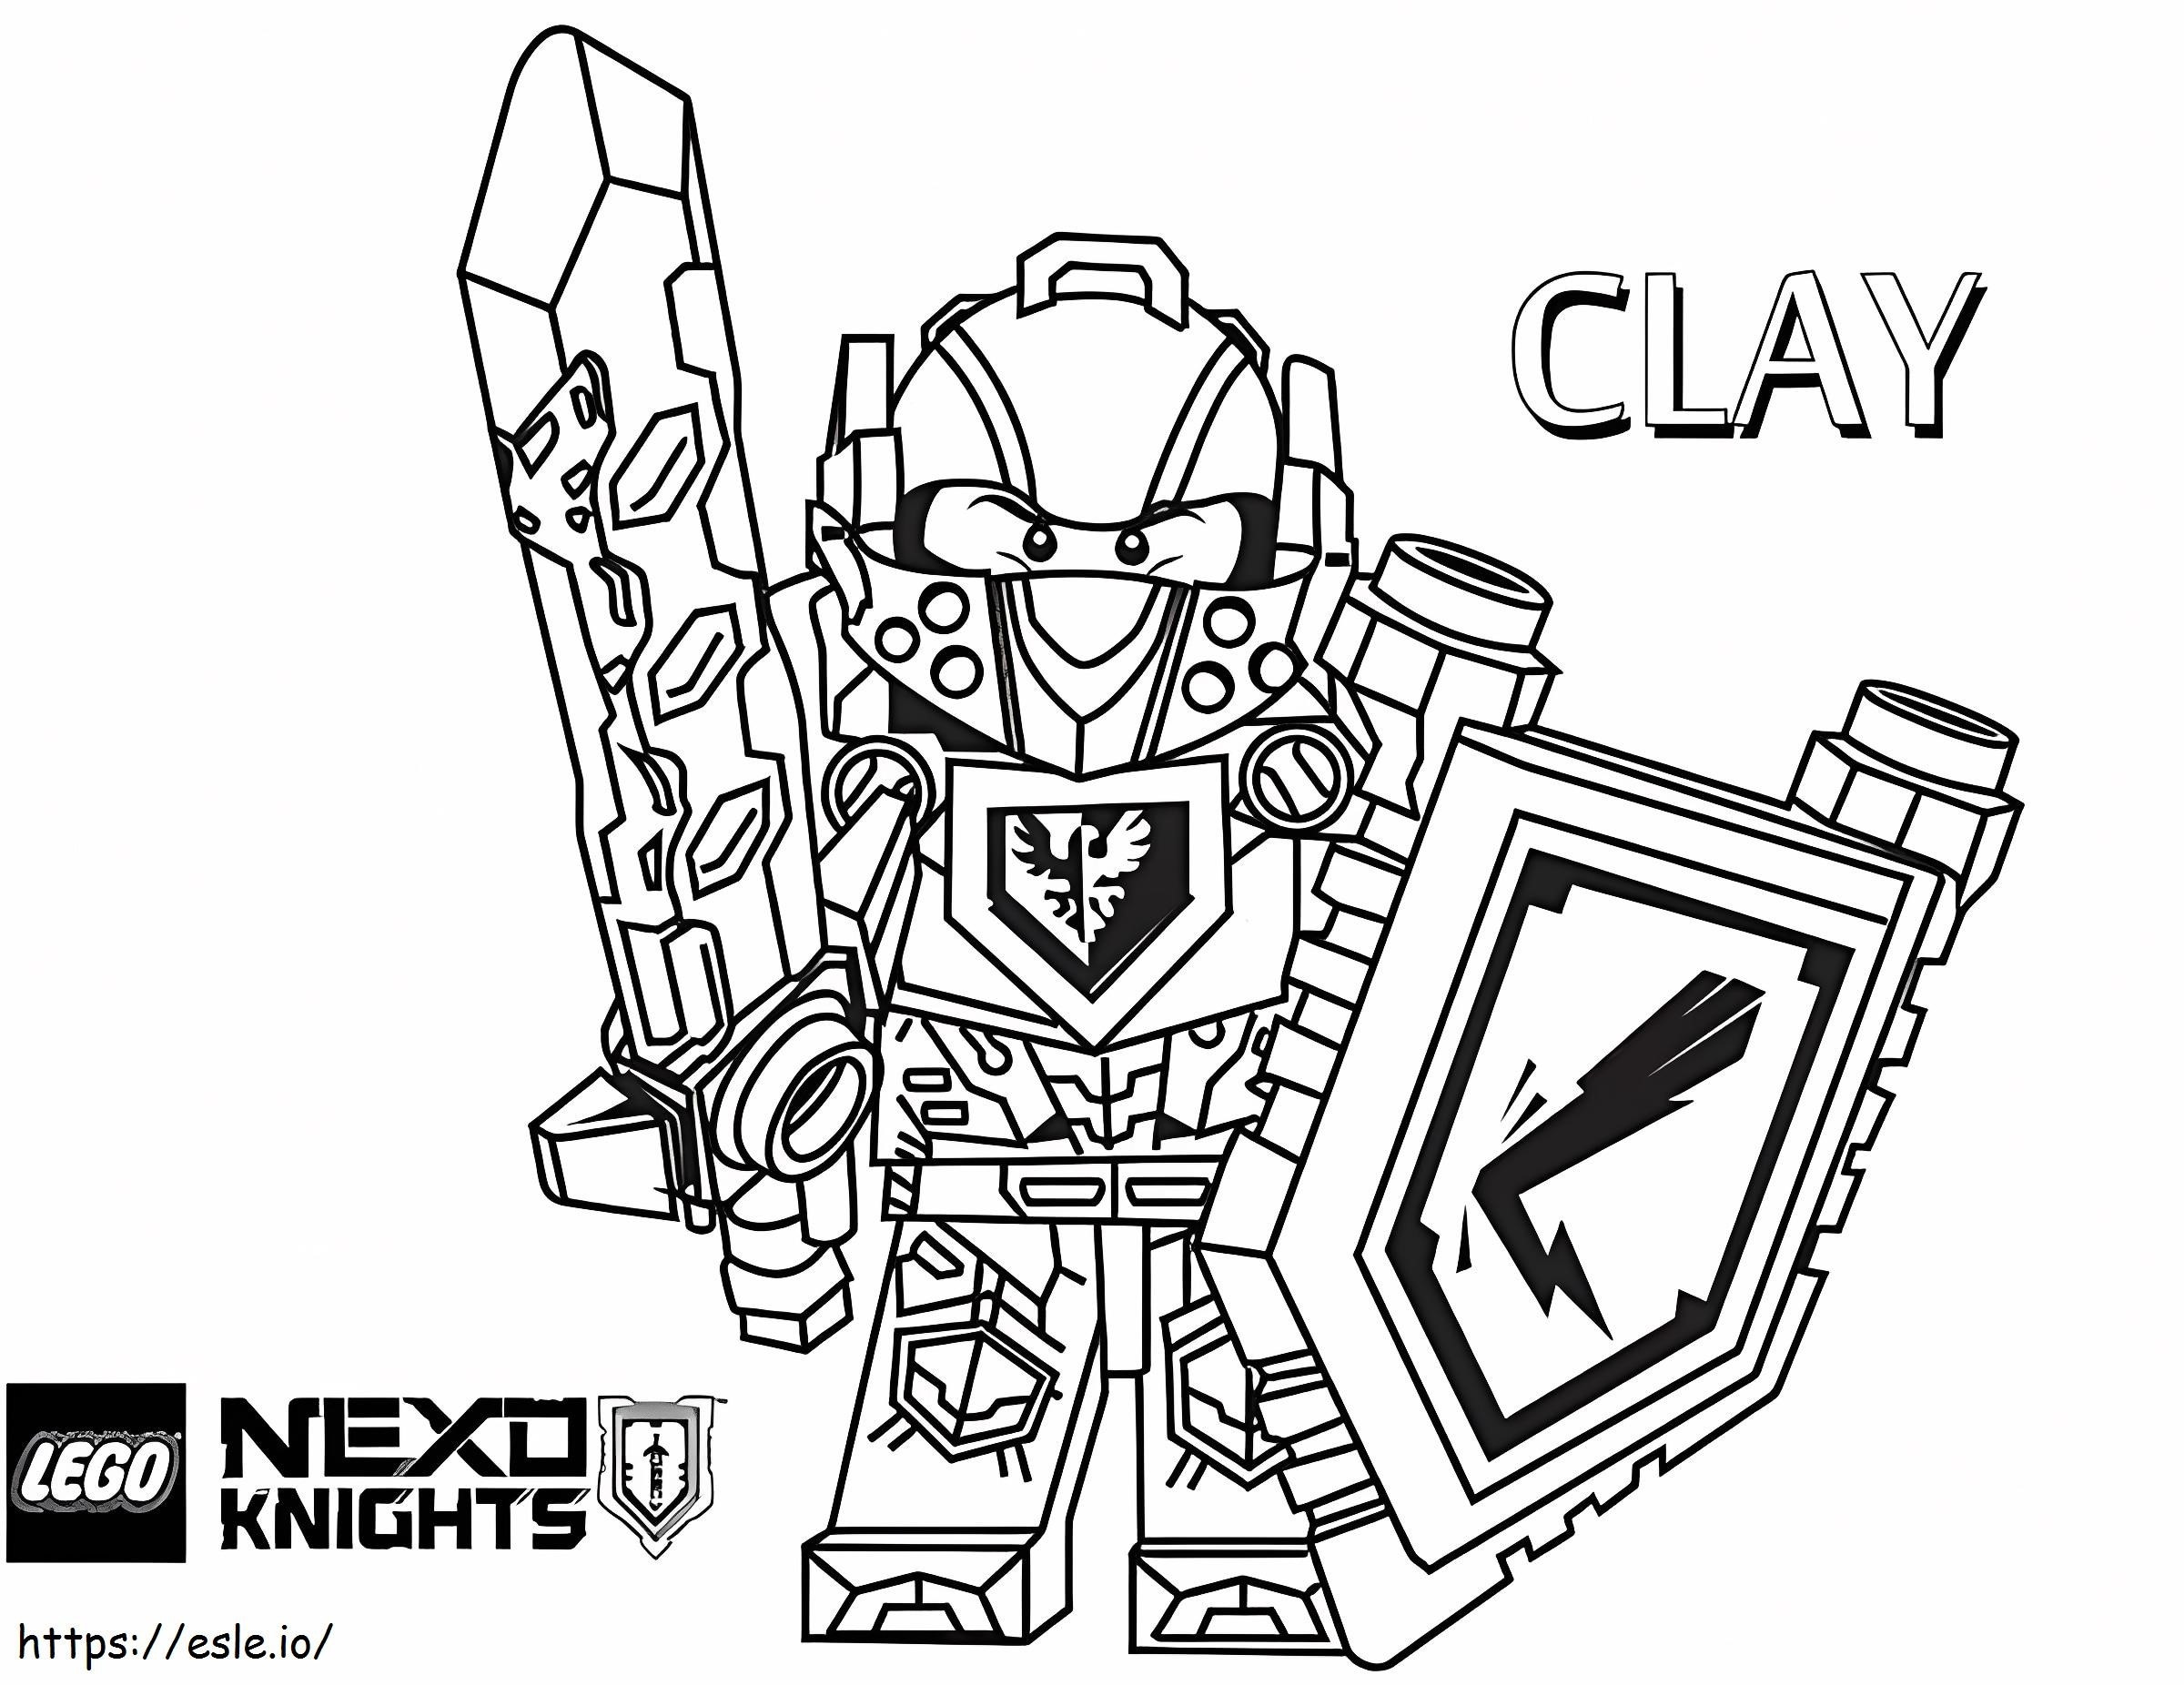 Clay Caballero De Nexus Caballero coloring page